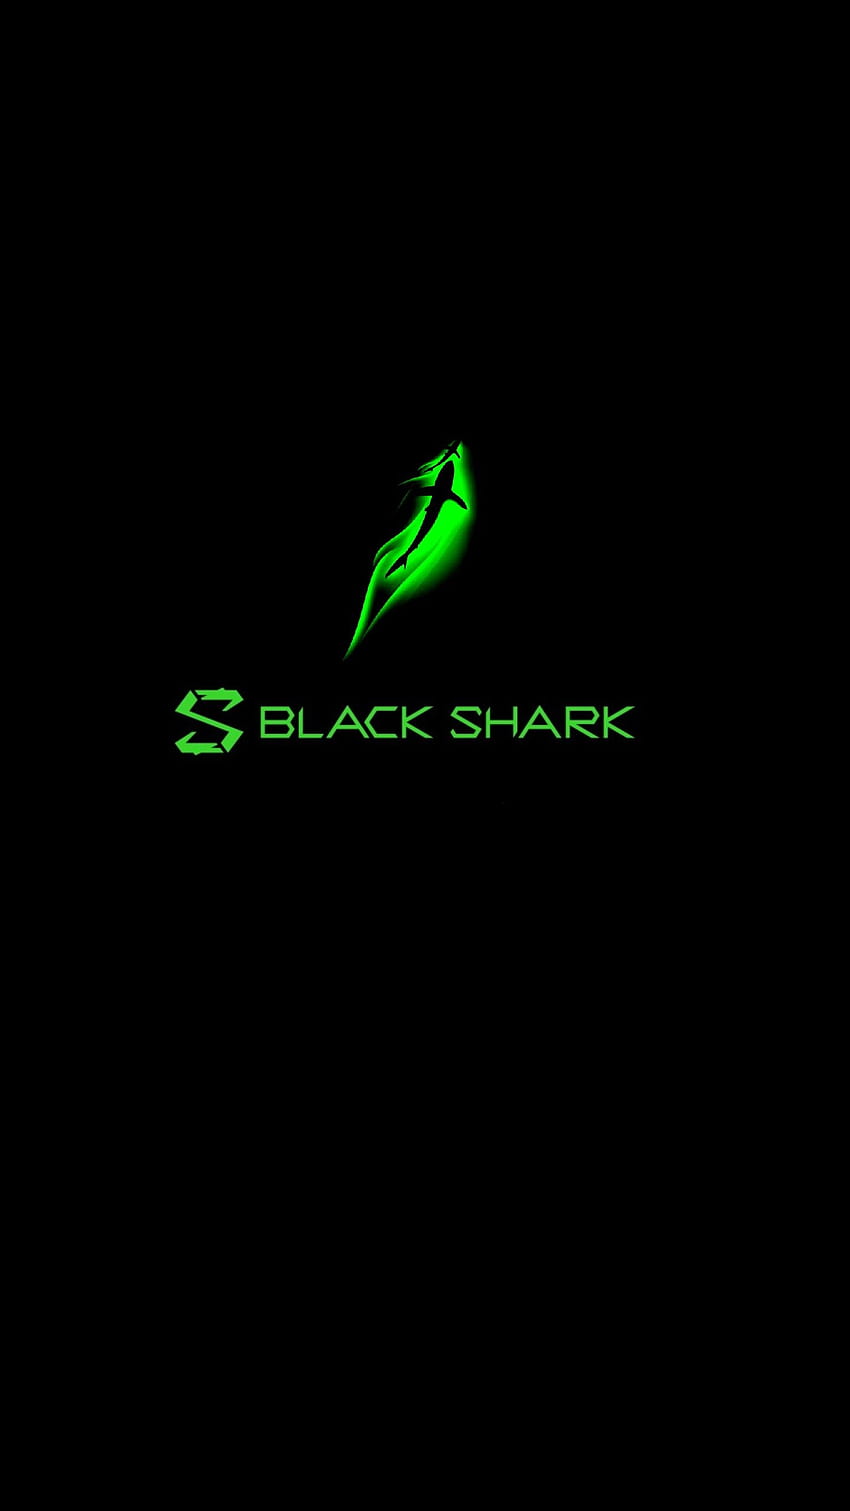 Black Shark Technologies Reveals New Brand Identity with New Corporate – Black  Shark (Global)